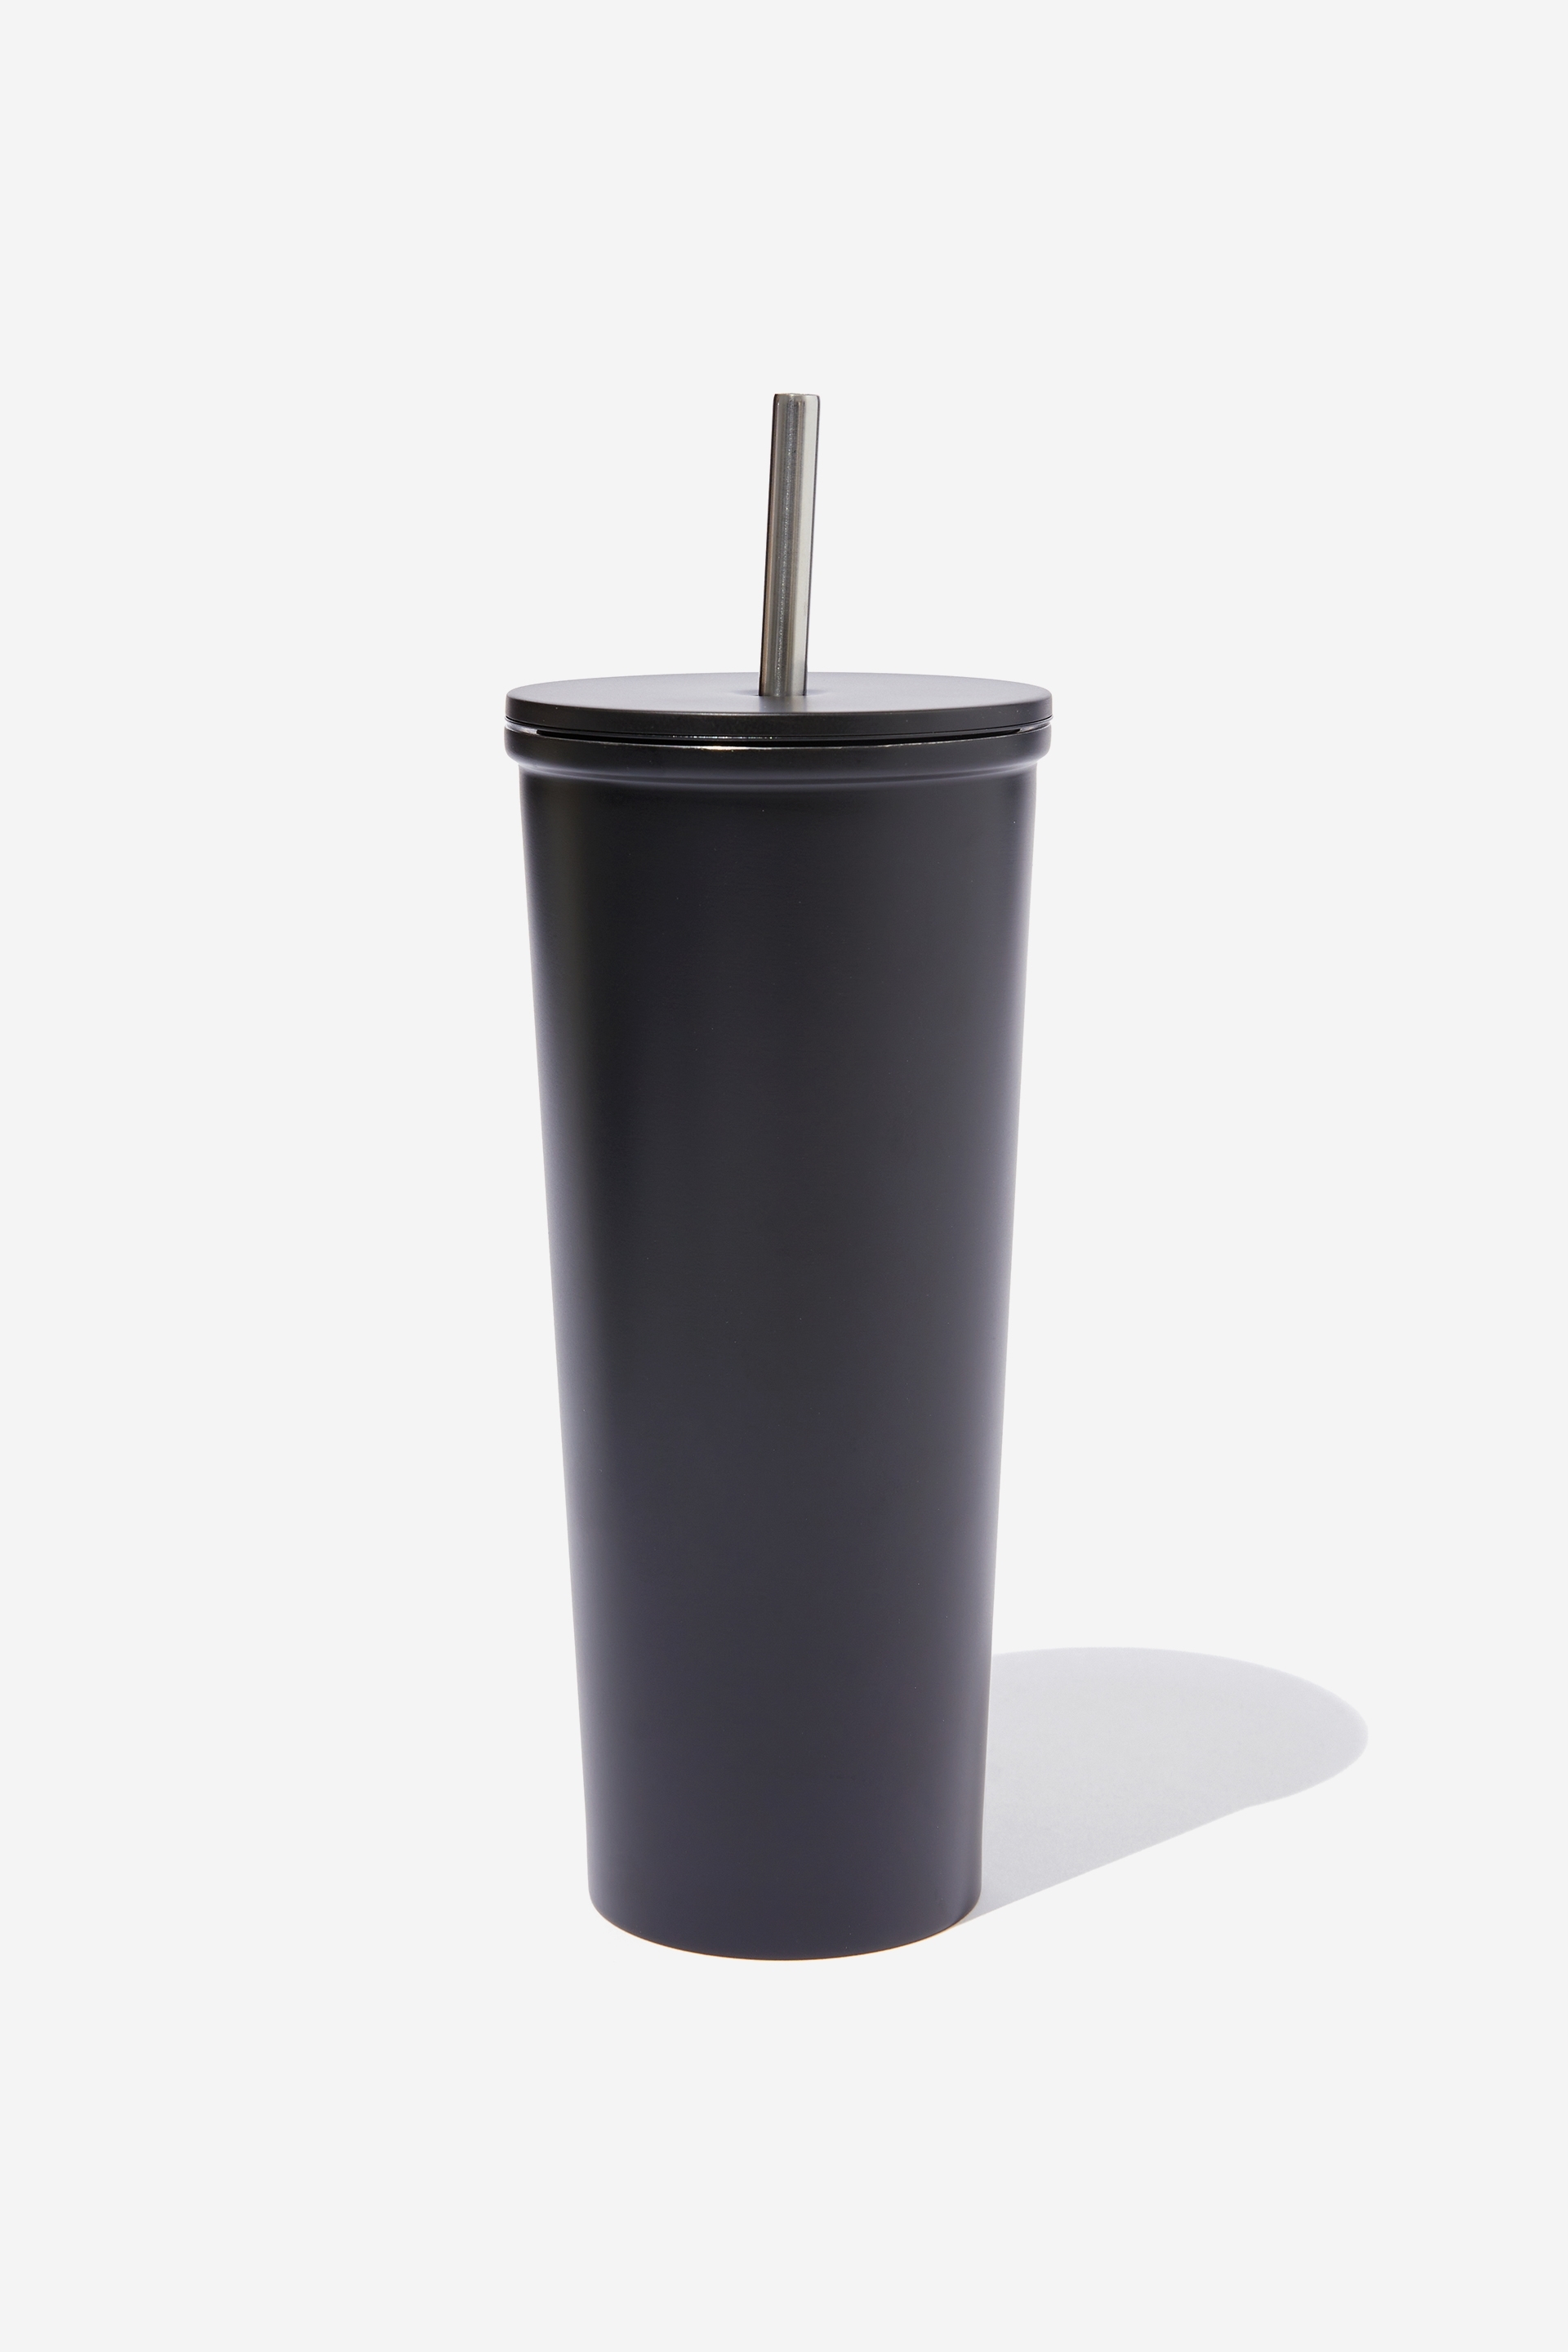 Typo - Metal Smoothie Cup - Black